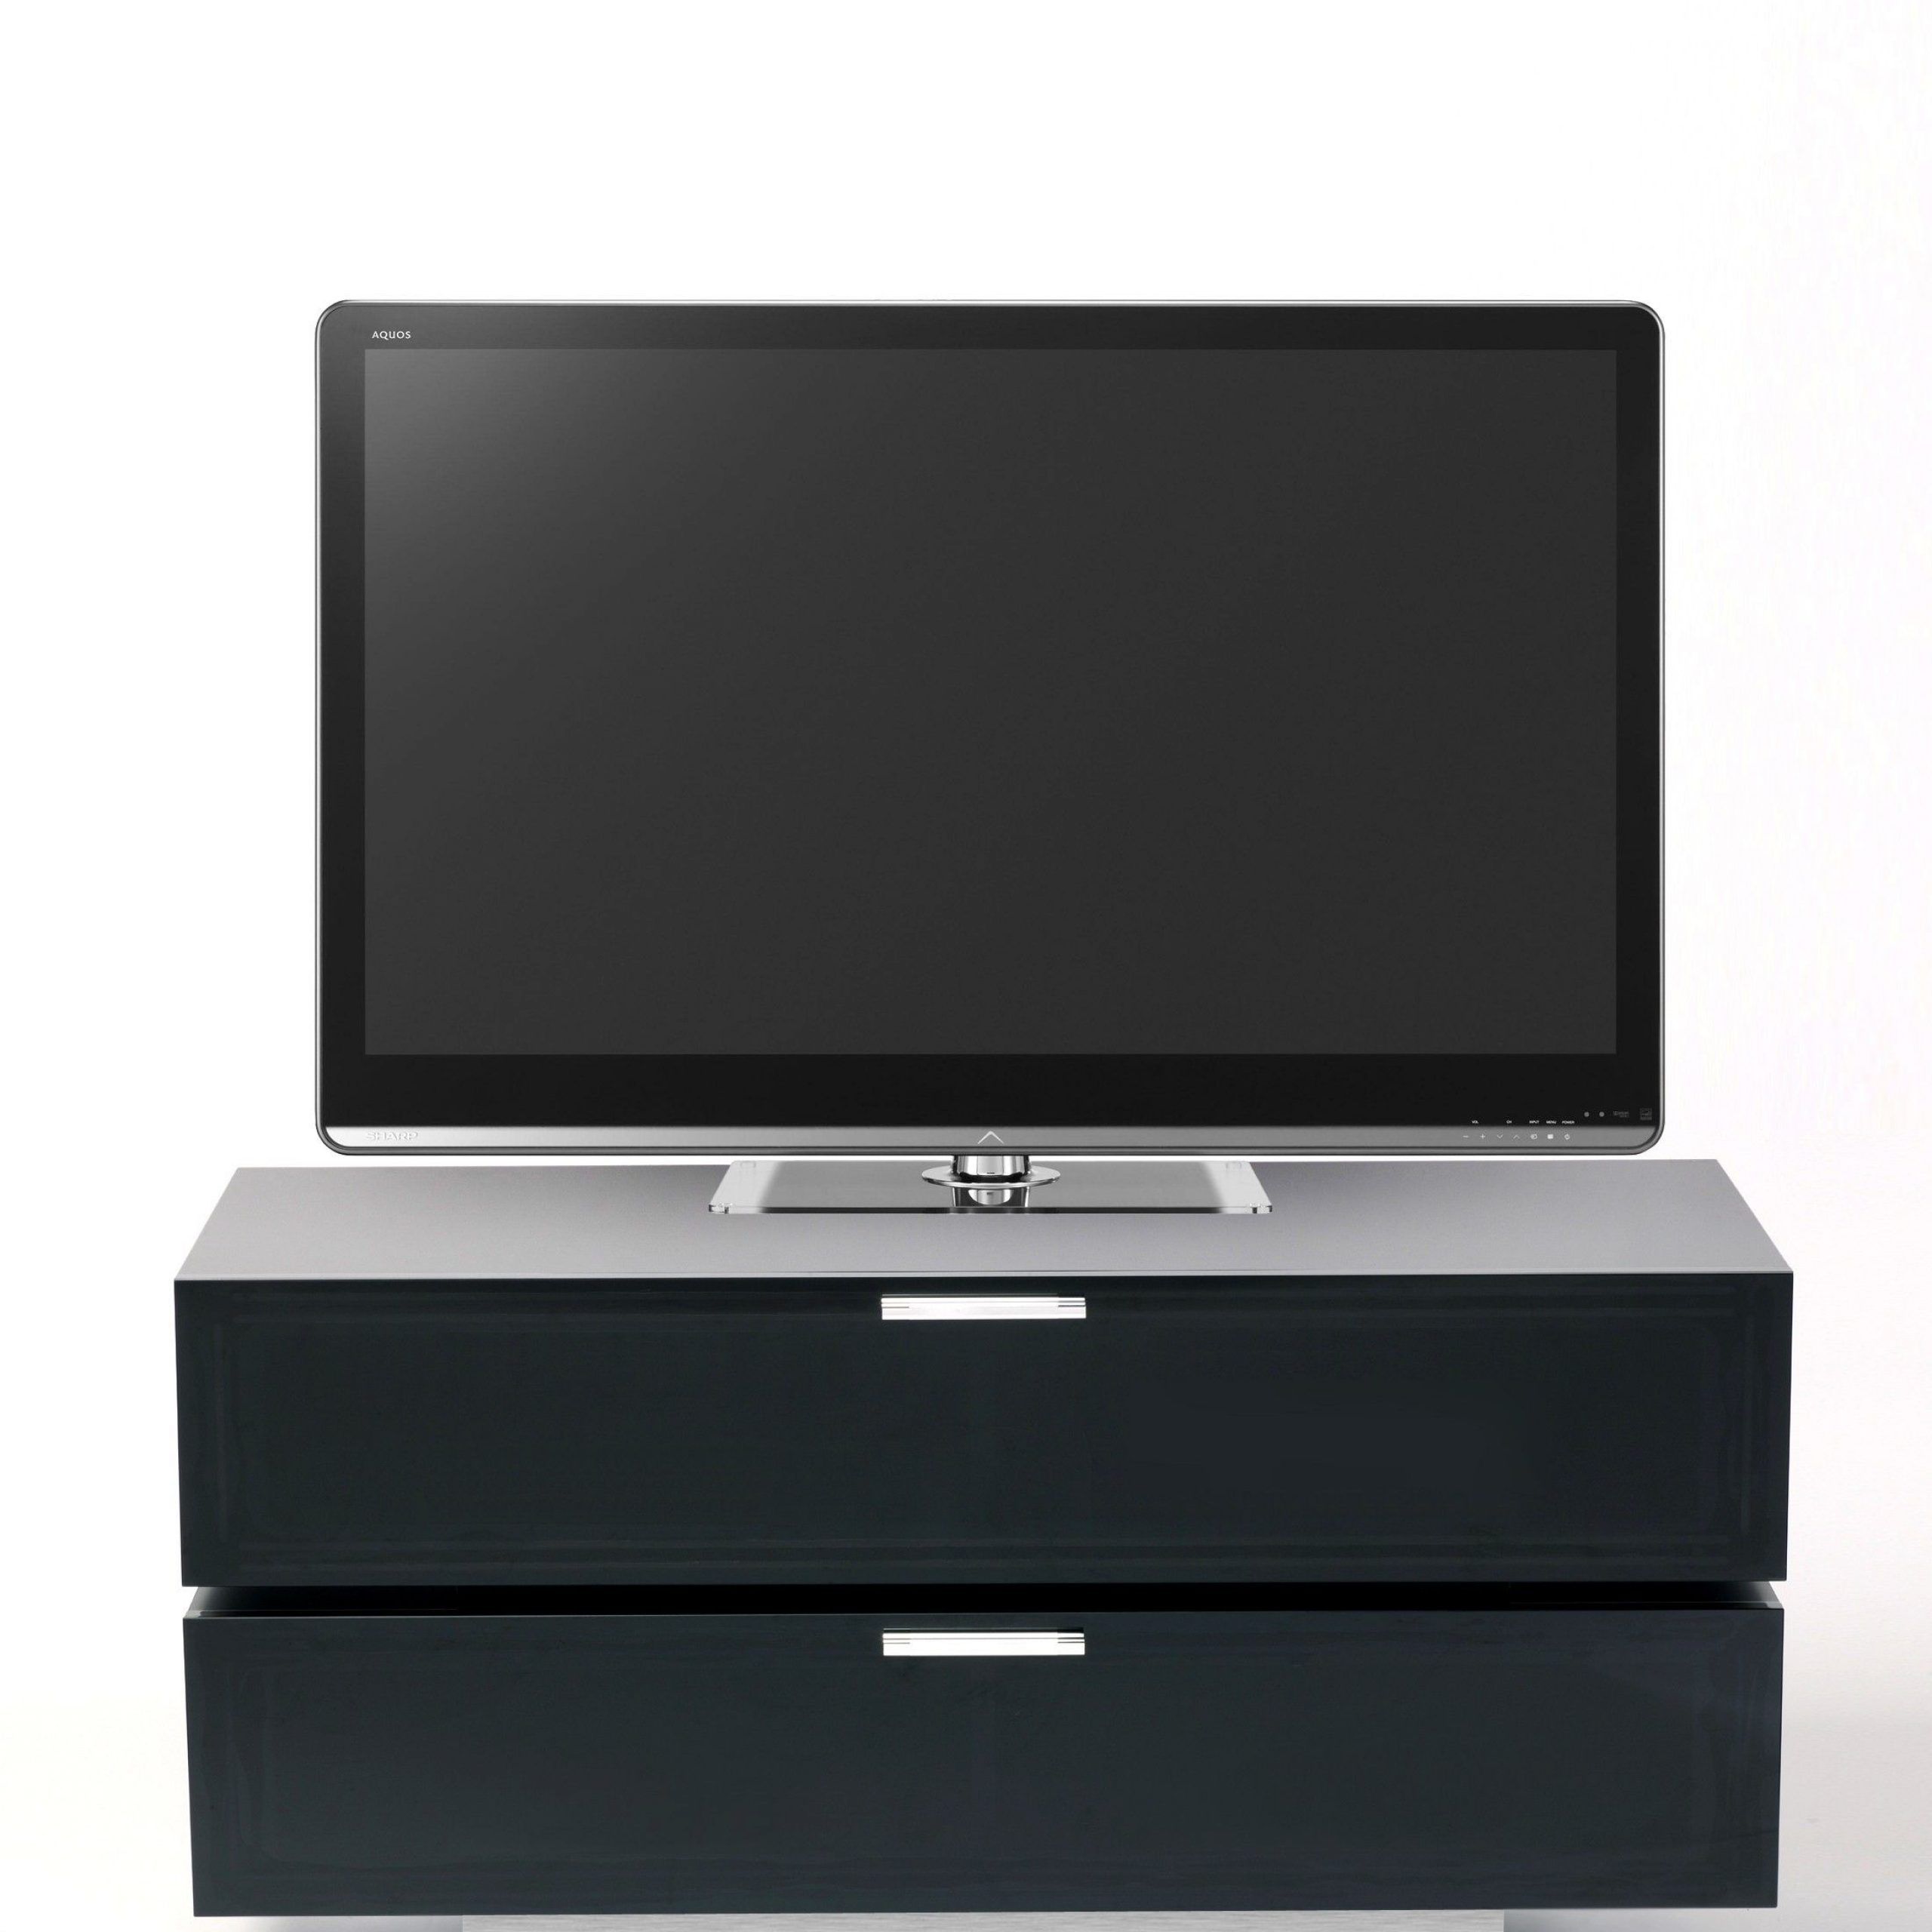 Stil Stand Black Gloss Tv Cabinet With Alu Plinth Stuk4001 In Stil Tv Stands (View 7 of 15)